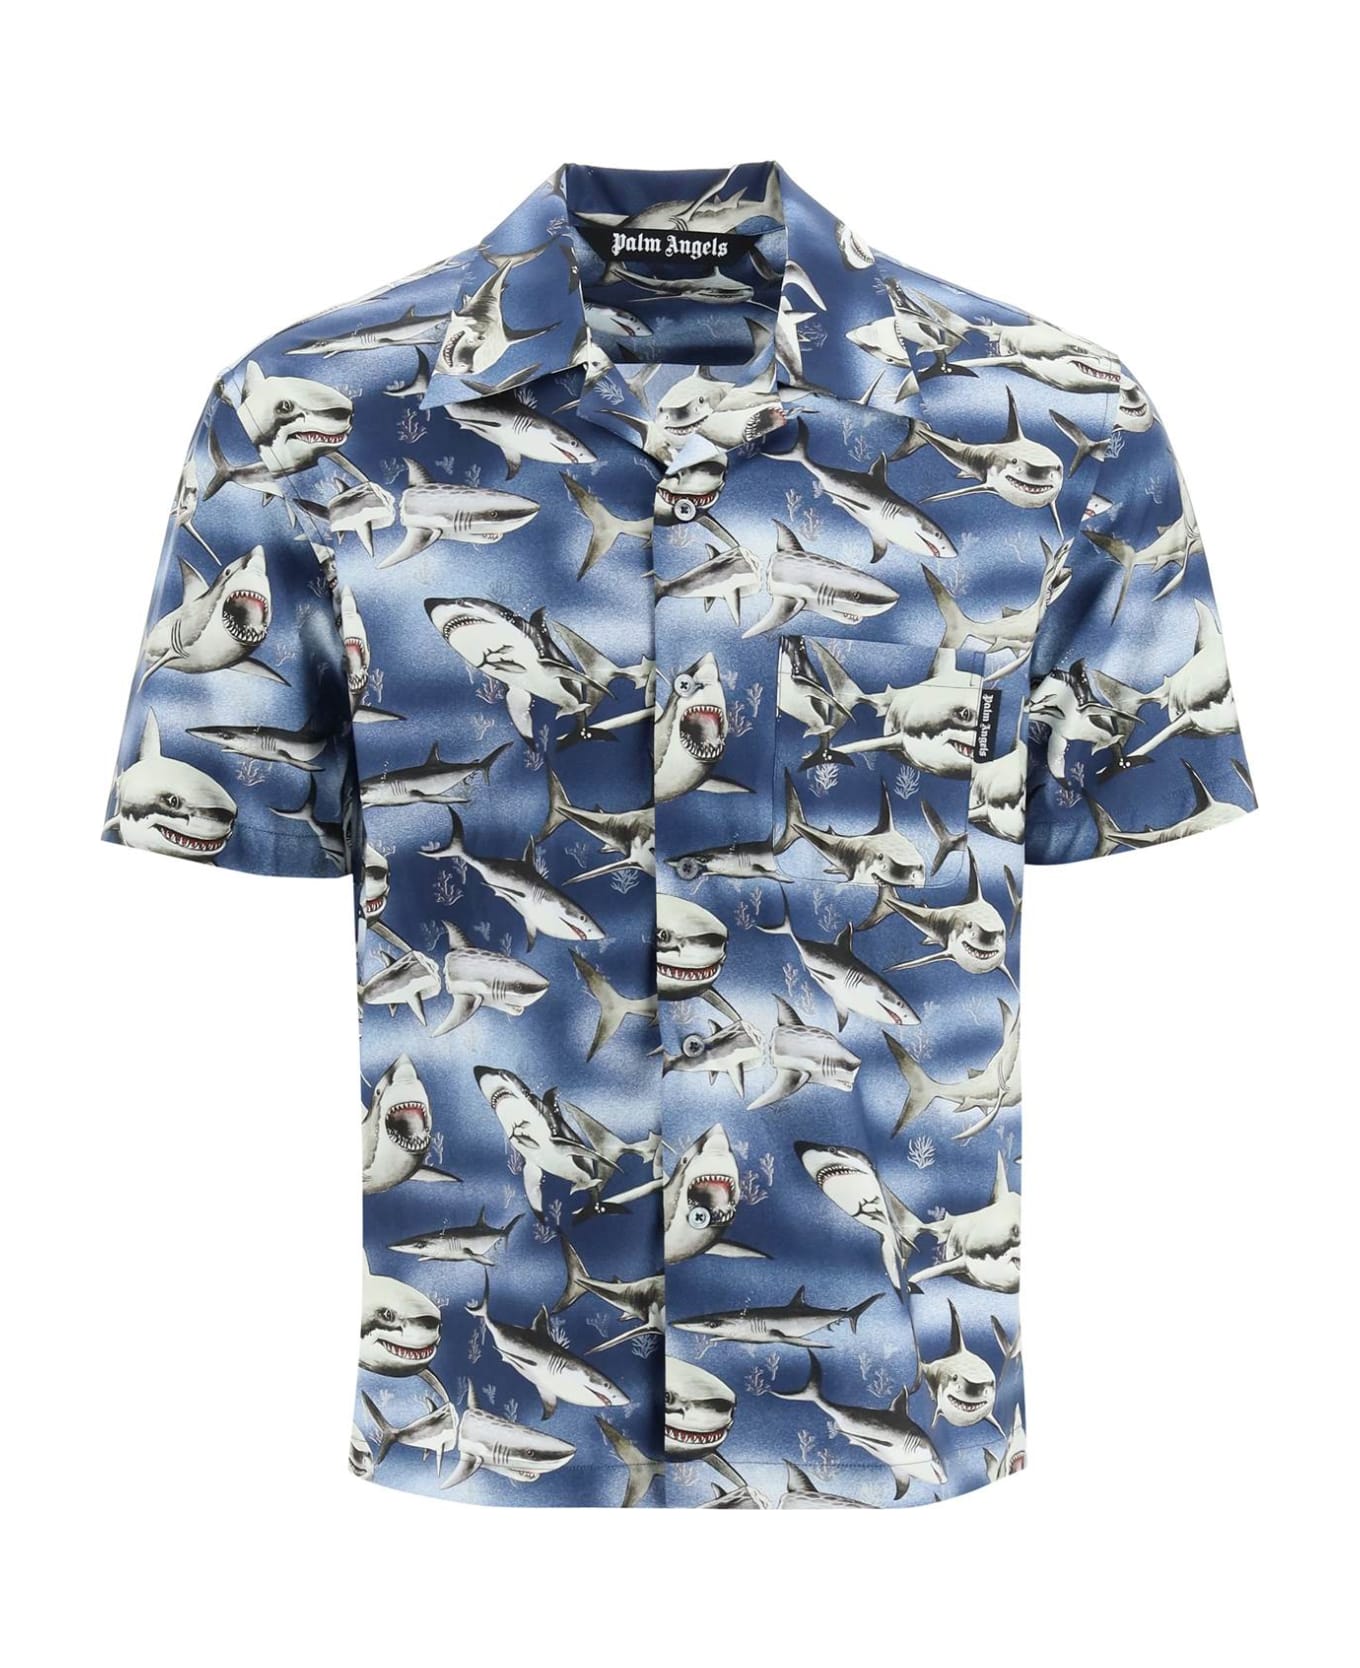 Palm Angels Shark Bowling Shirt - Blue Black